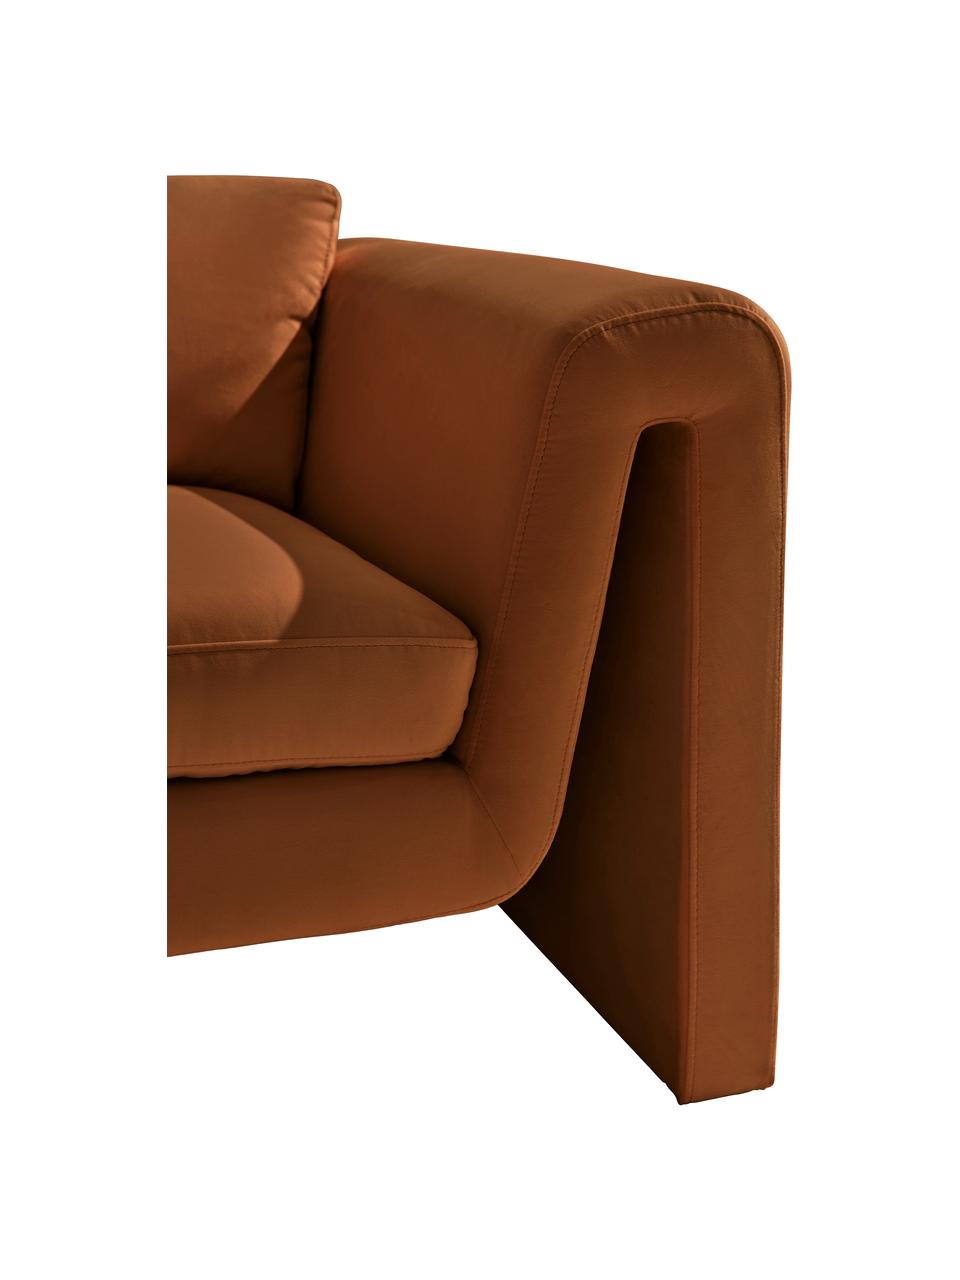 Fauteuil lounge velours brun Mika, Velours brun, larg. 105 x prof. 88 cm